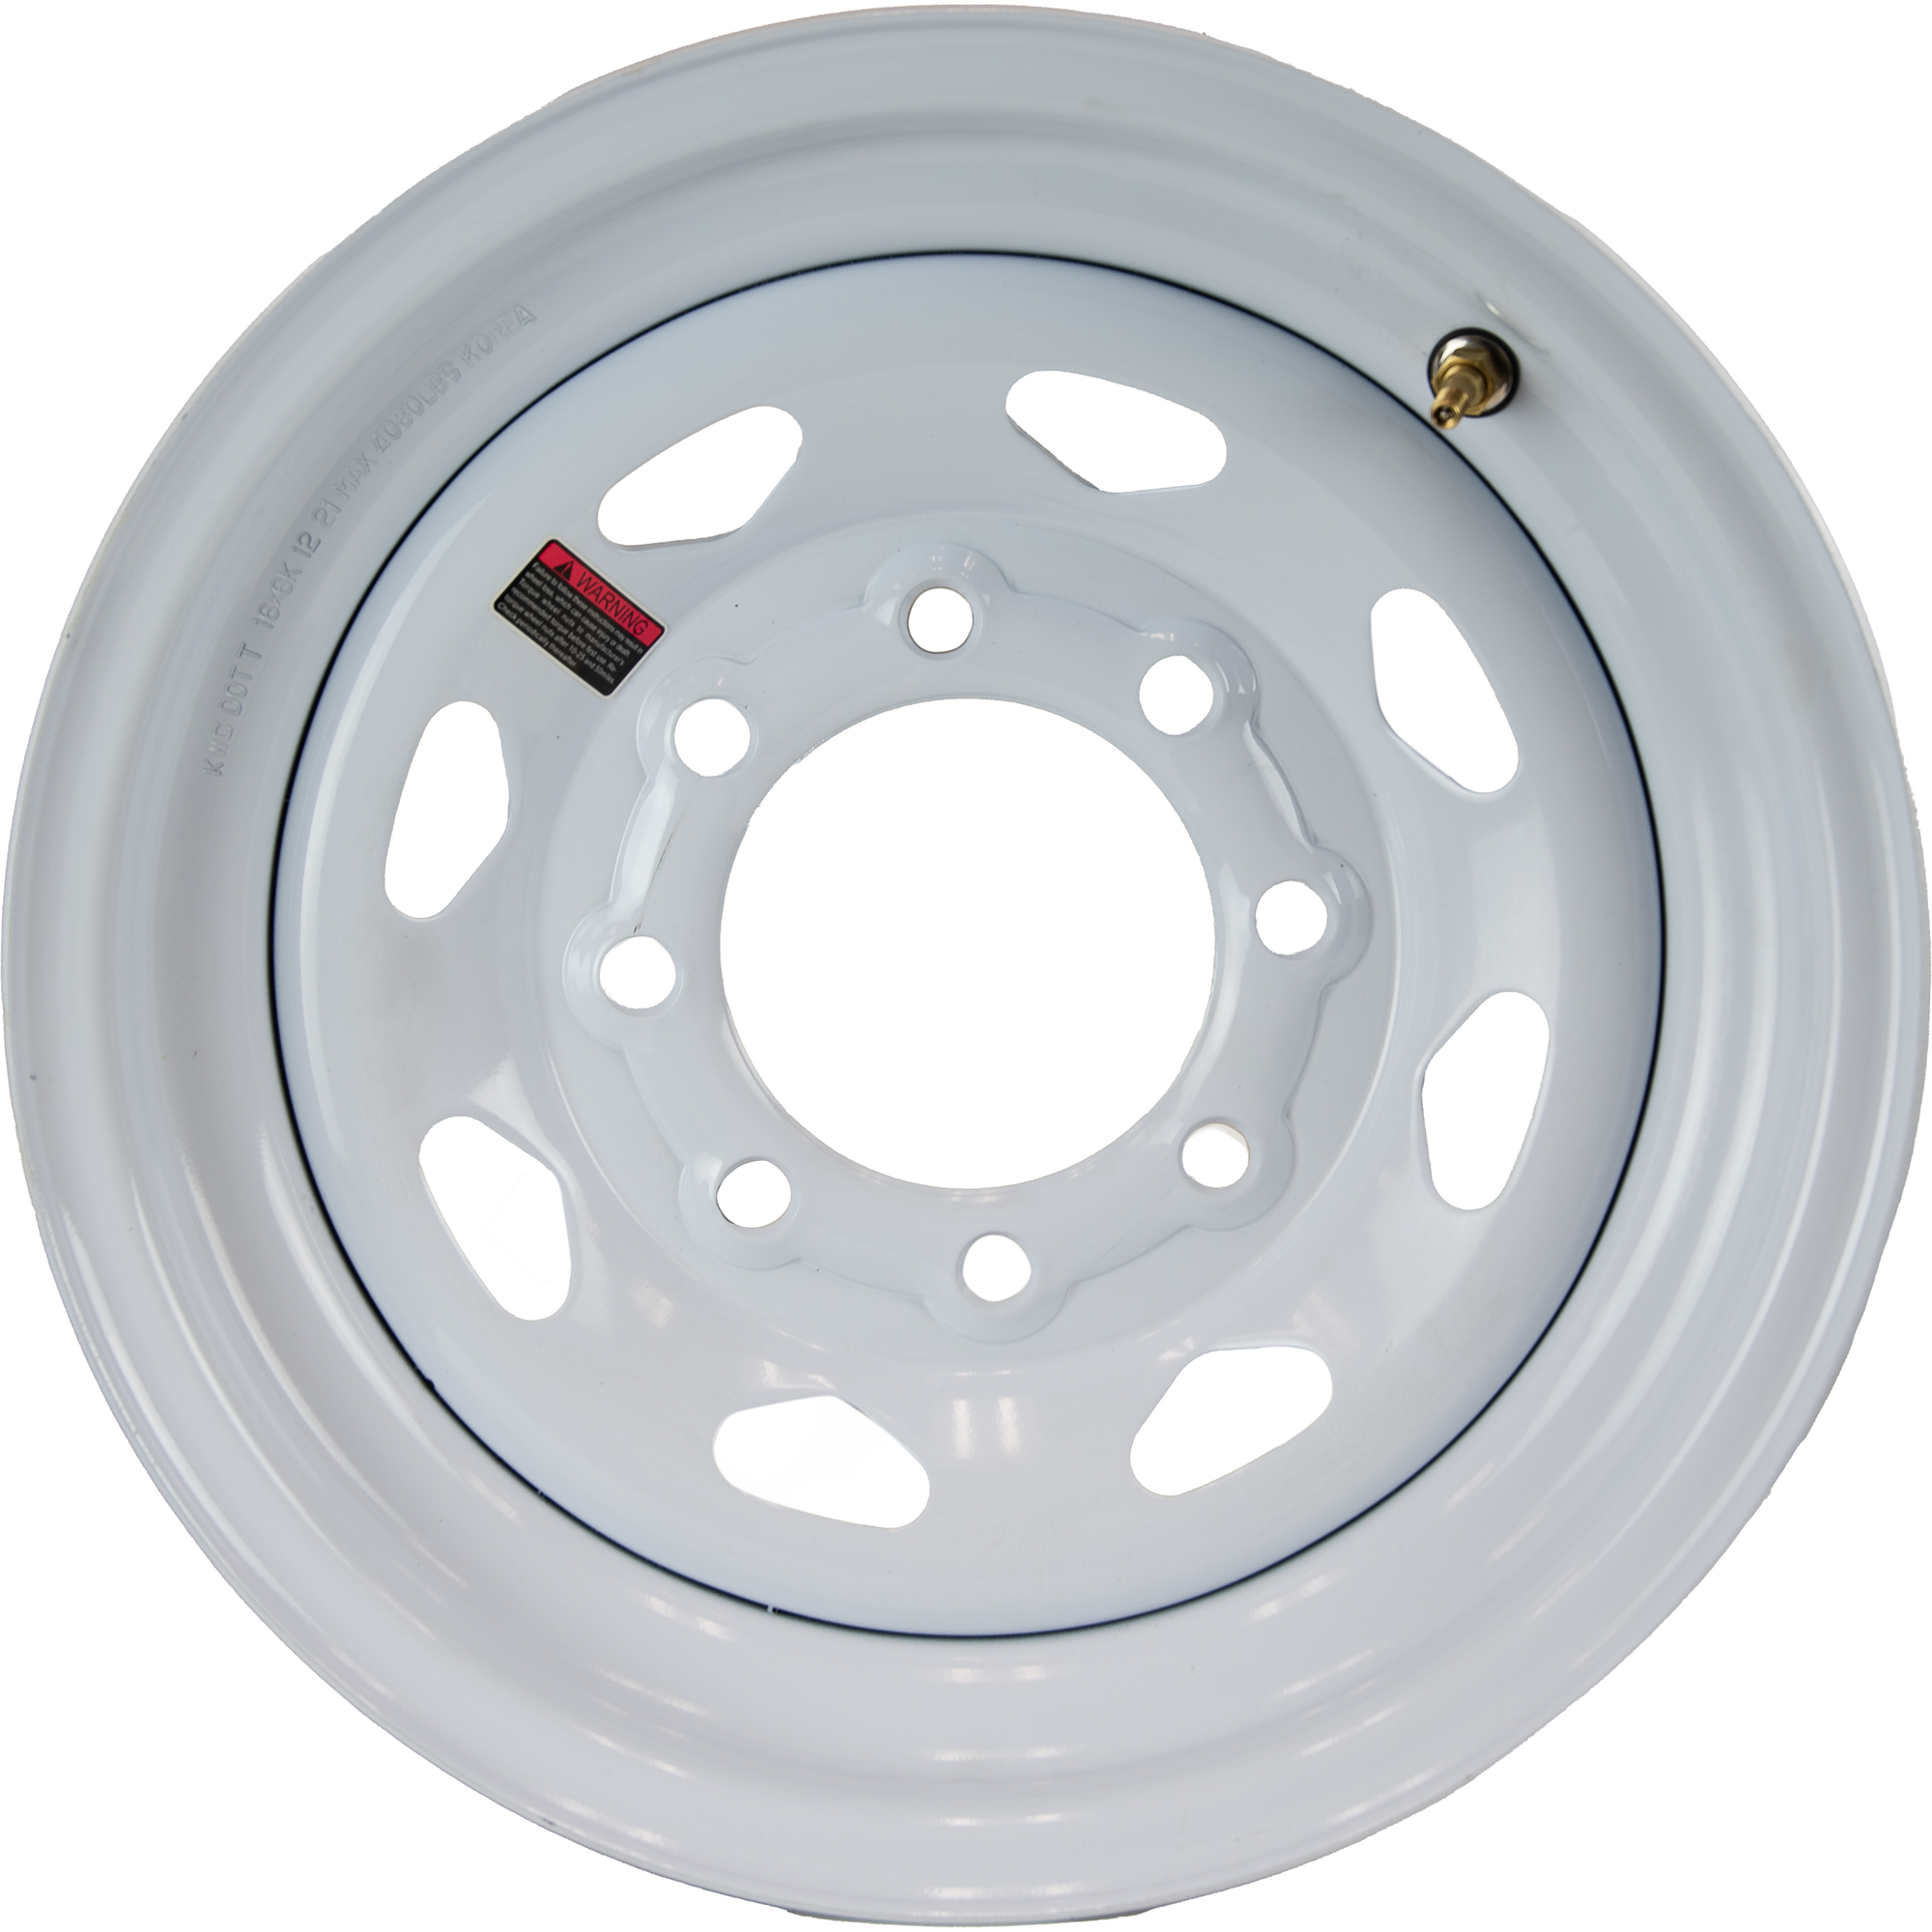 HI-RUN, Steel Wheel for Highway Trailer, Tire Size 16X6 8-6.5, Bolt Holes (qty.) 8, Model KW1007